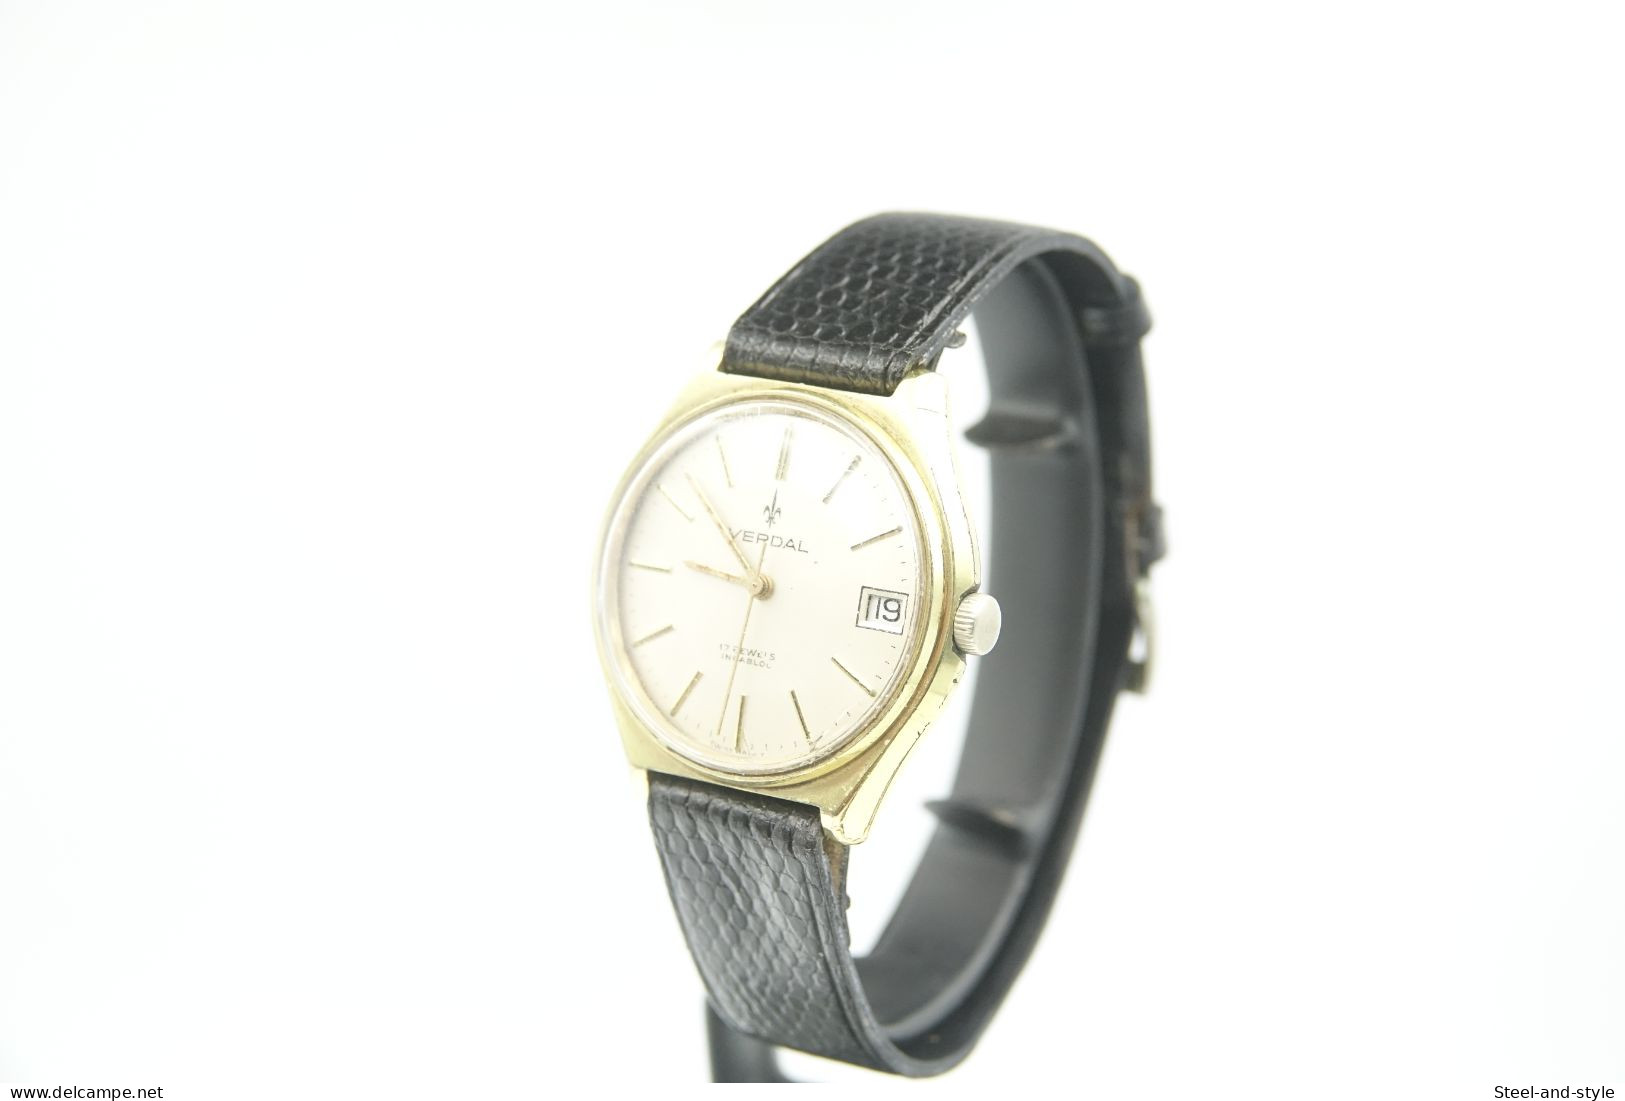 Watches : VERDAL 17 JEWELS INCABLOC HANDWIND - Original - Running - 1960s - Watches: Top-of-the-Line